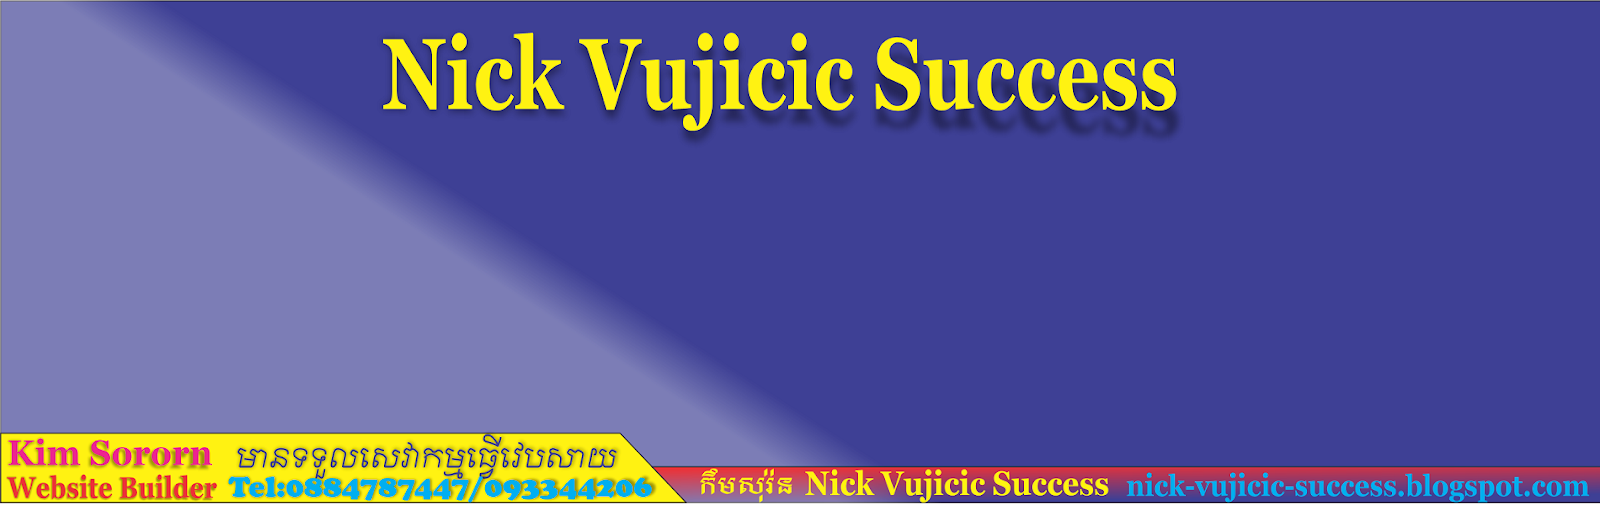 Nick Vujicic success